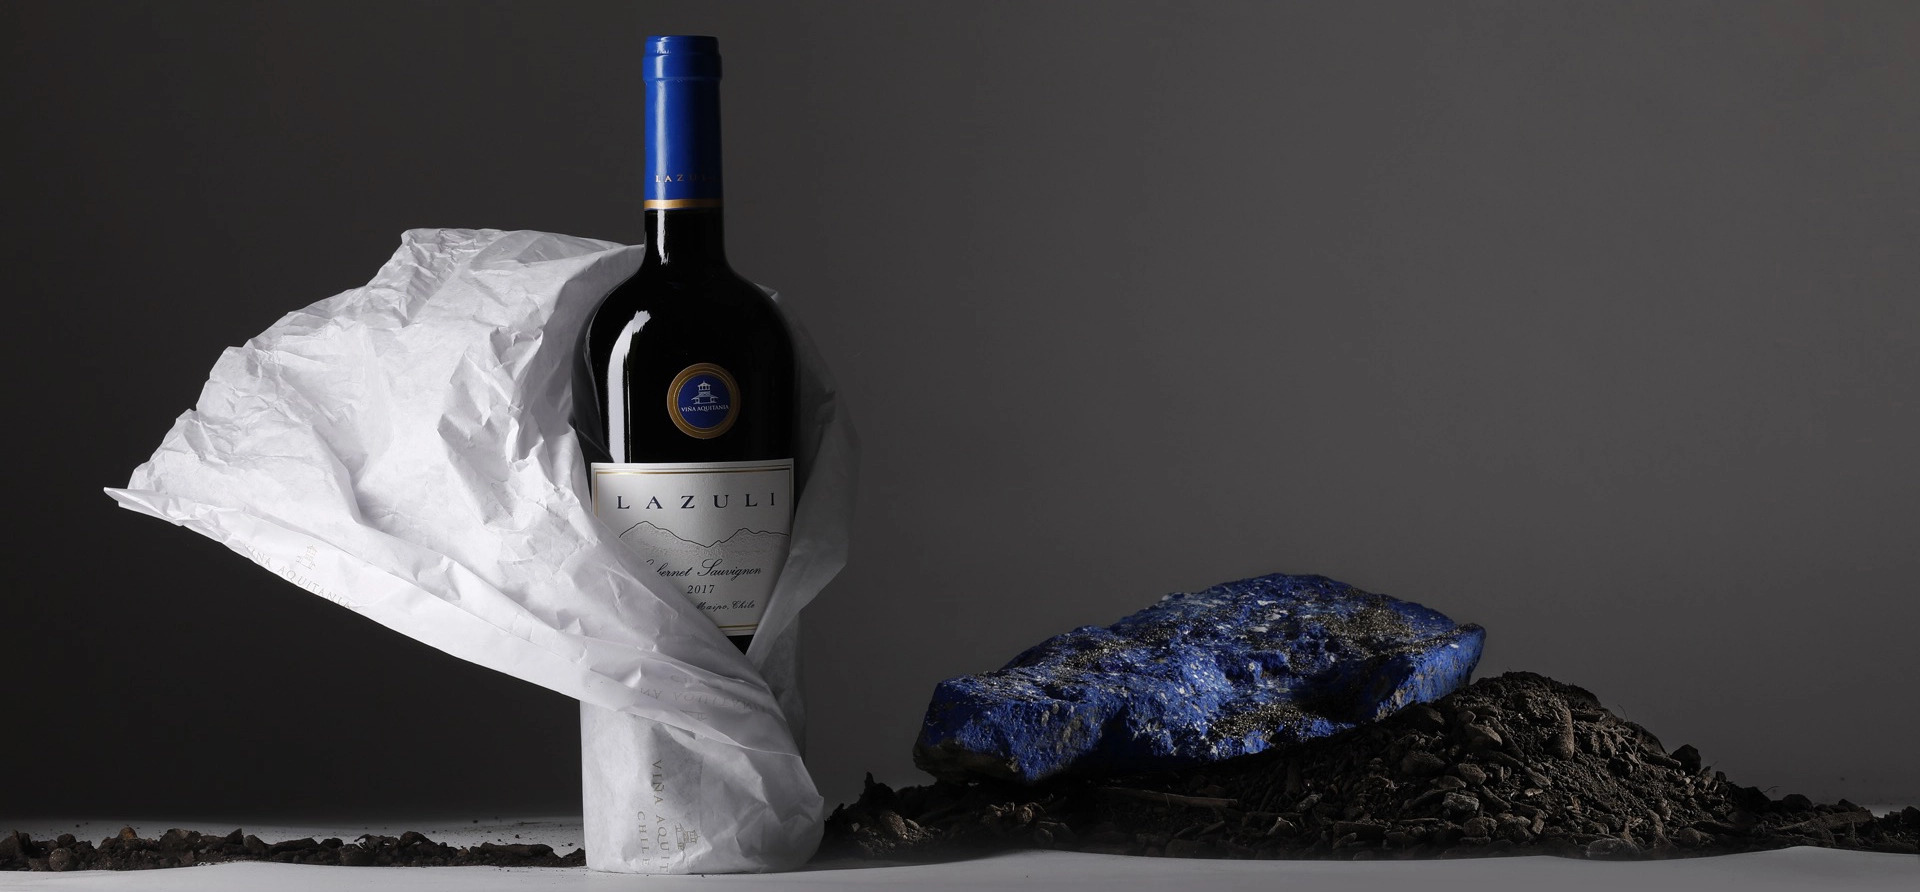 House Image of Mejores vinos chilenos: Lazuli Cabernet Sauvignon de la Viña Aquitania